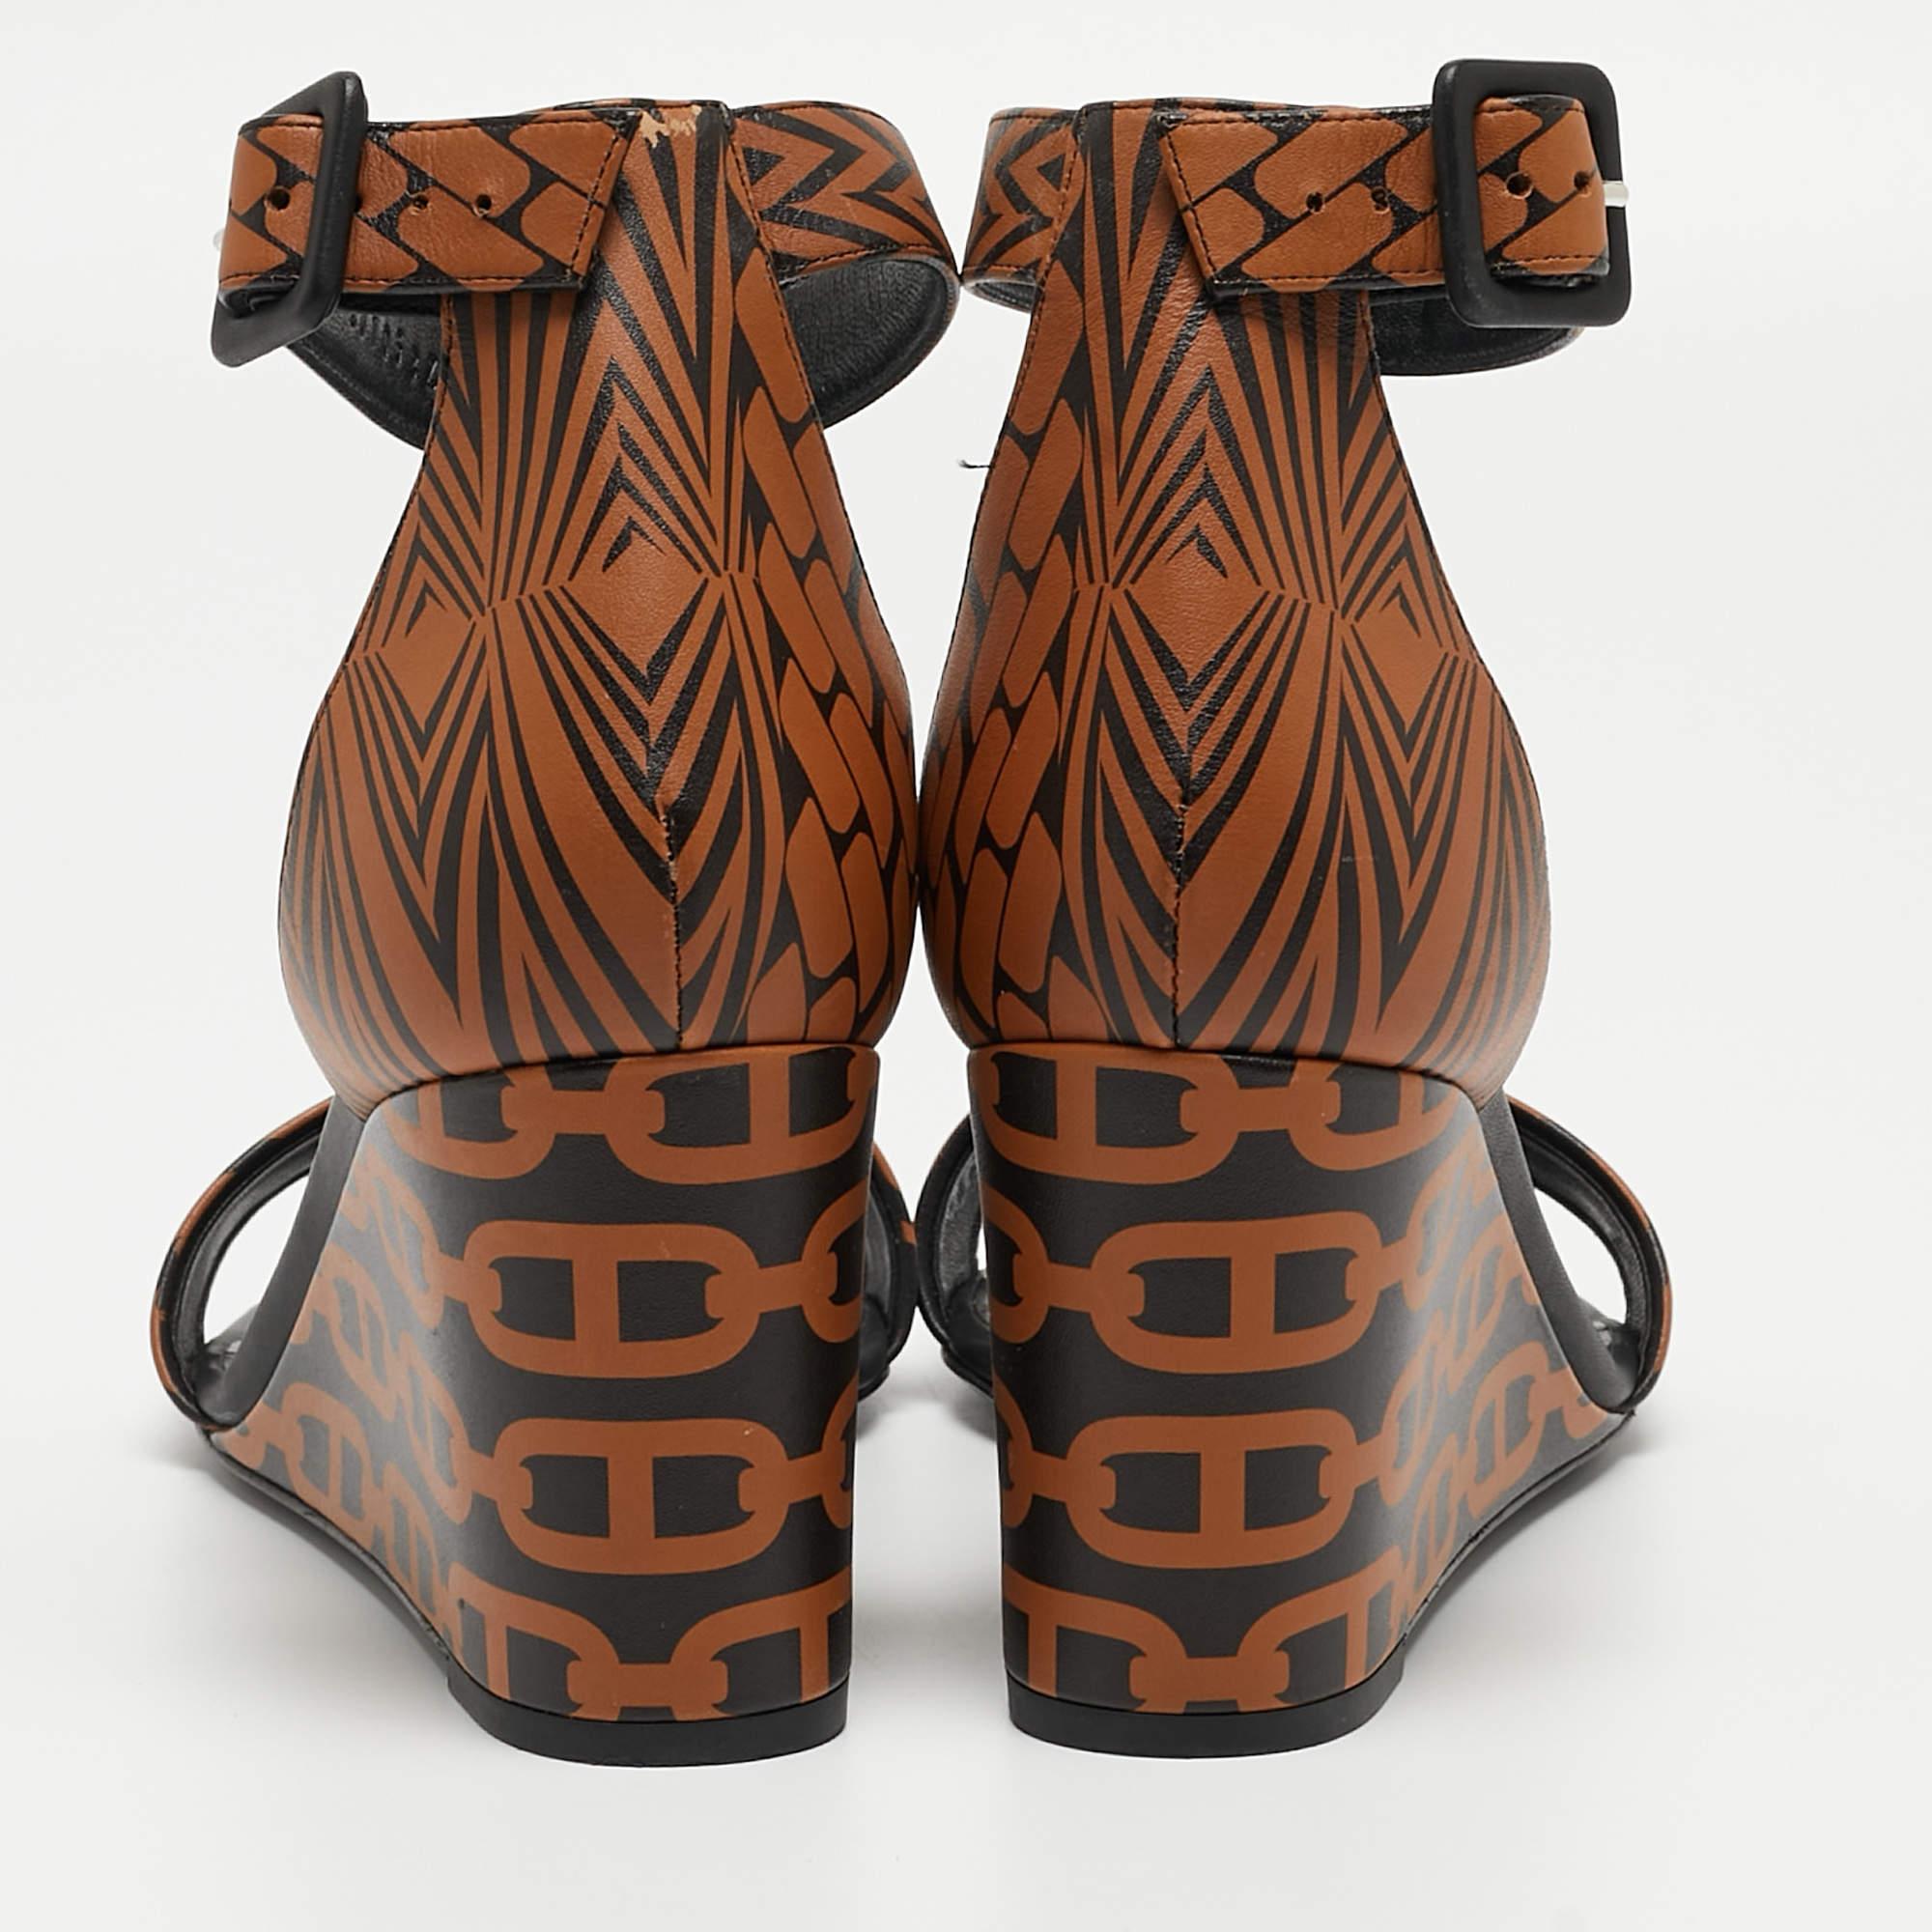 Hermes Black/Brown Printed Leather Acapulco Wedge Sandals Size 40 2